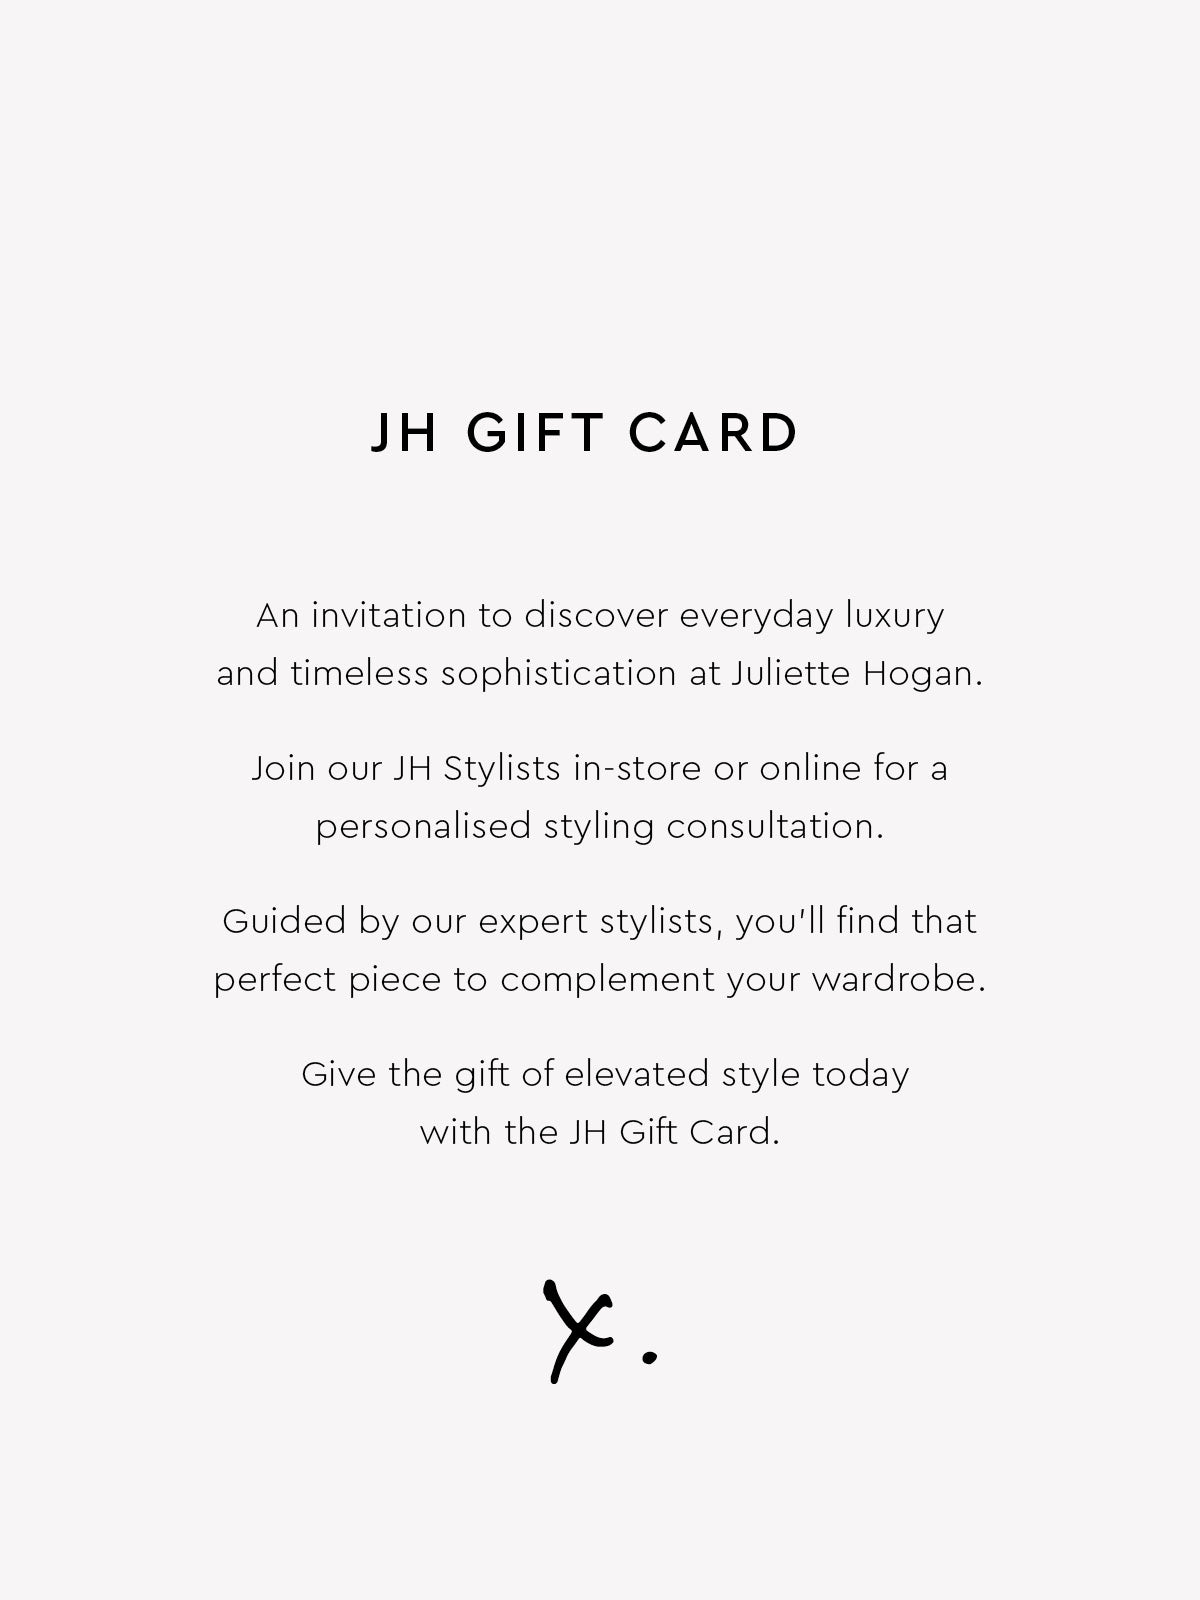 JH $50 Gift Card